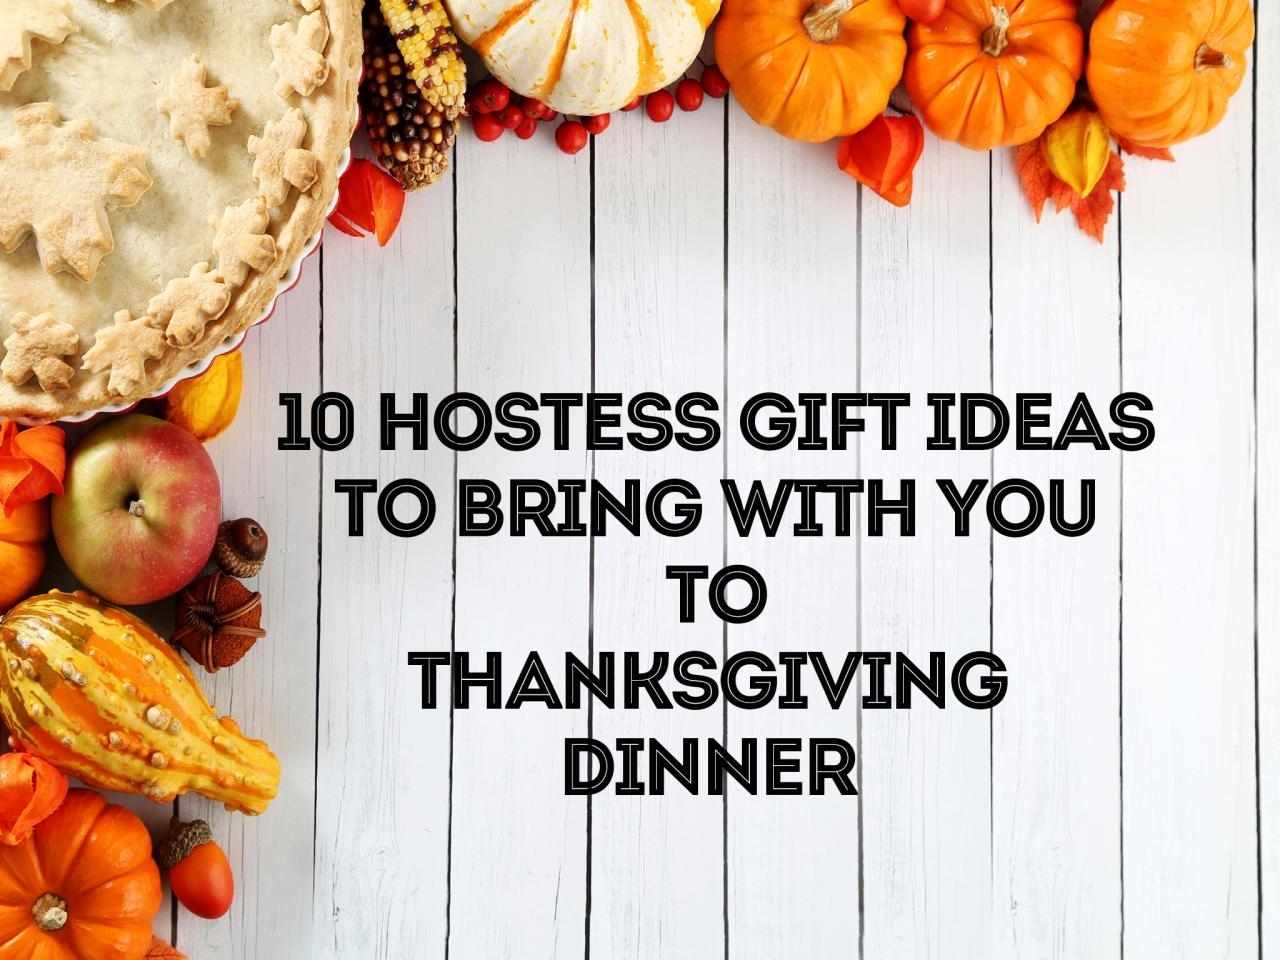 10 Best Hostess Gift Ideas For Dinner Party 2021